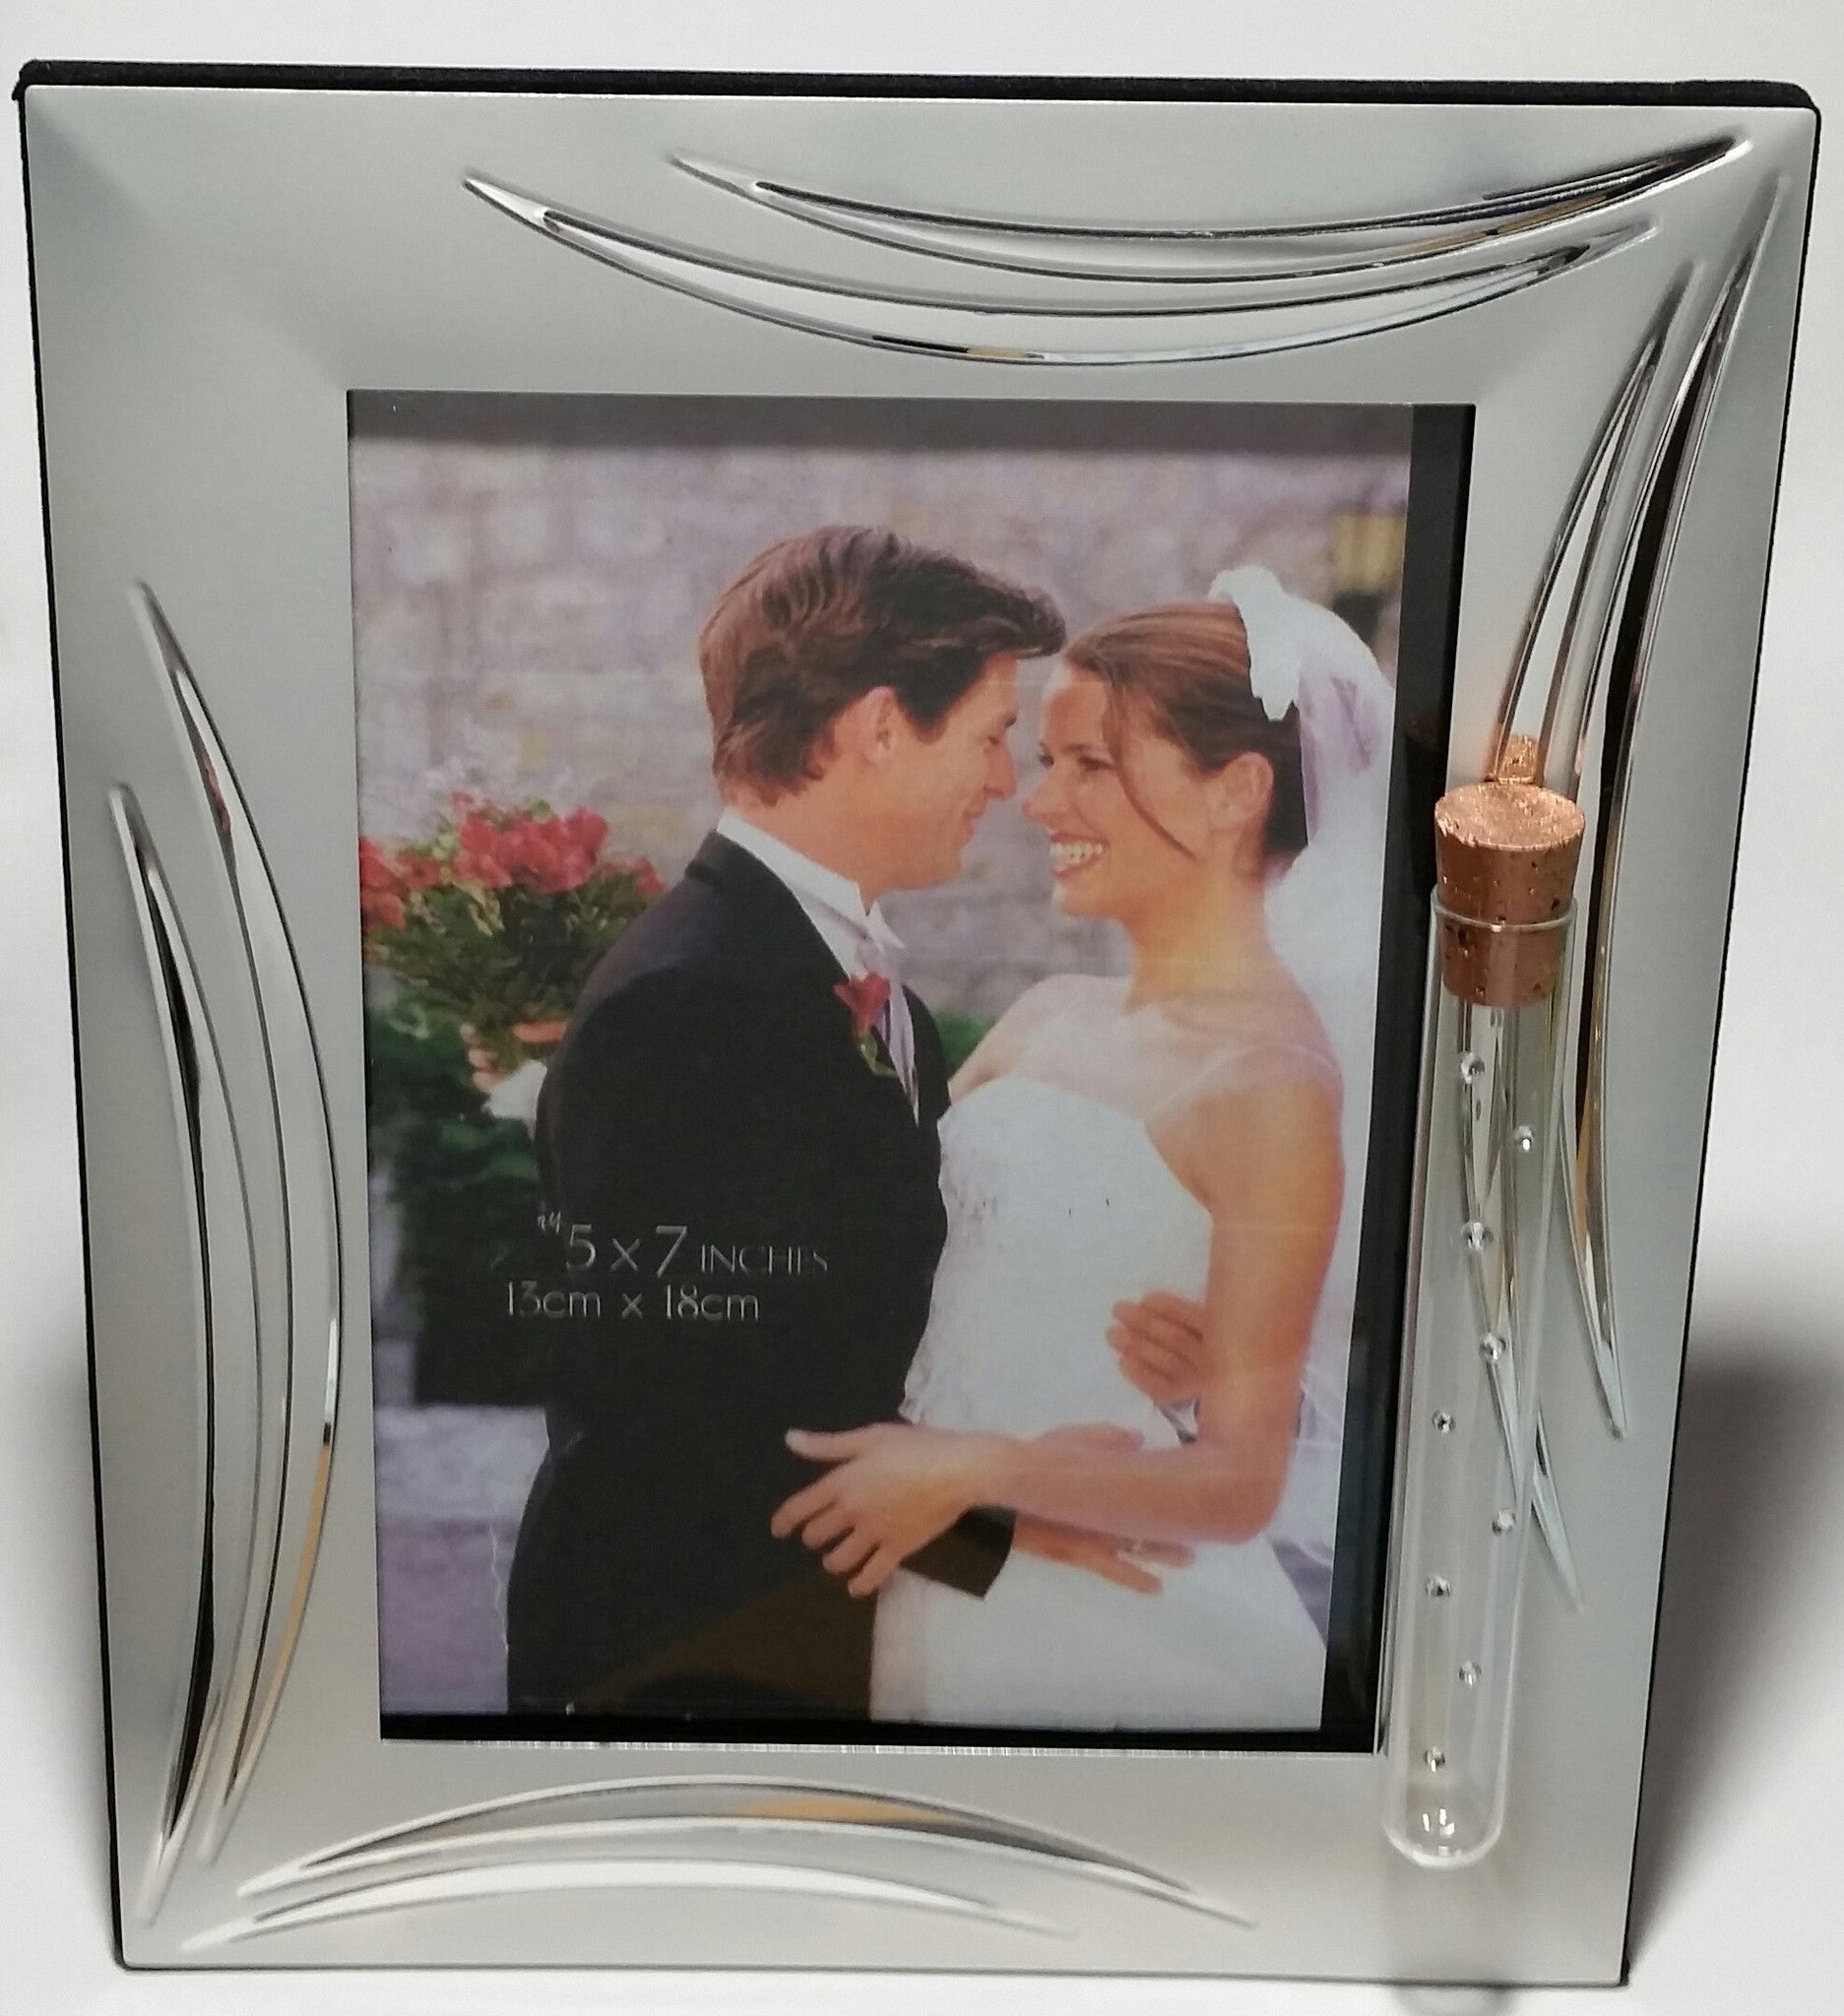 Jewish Wedding Picture Frame - Jewish Engagement - Holds Shards From Wedding Ceremony